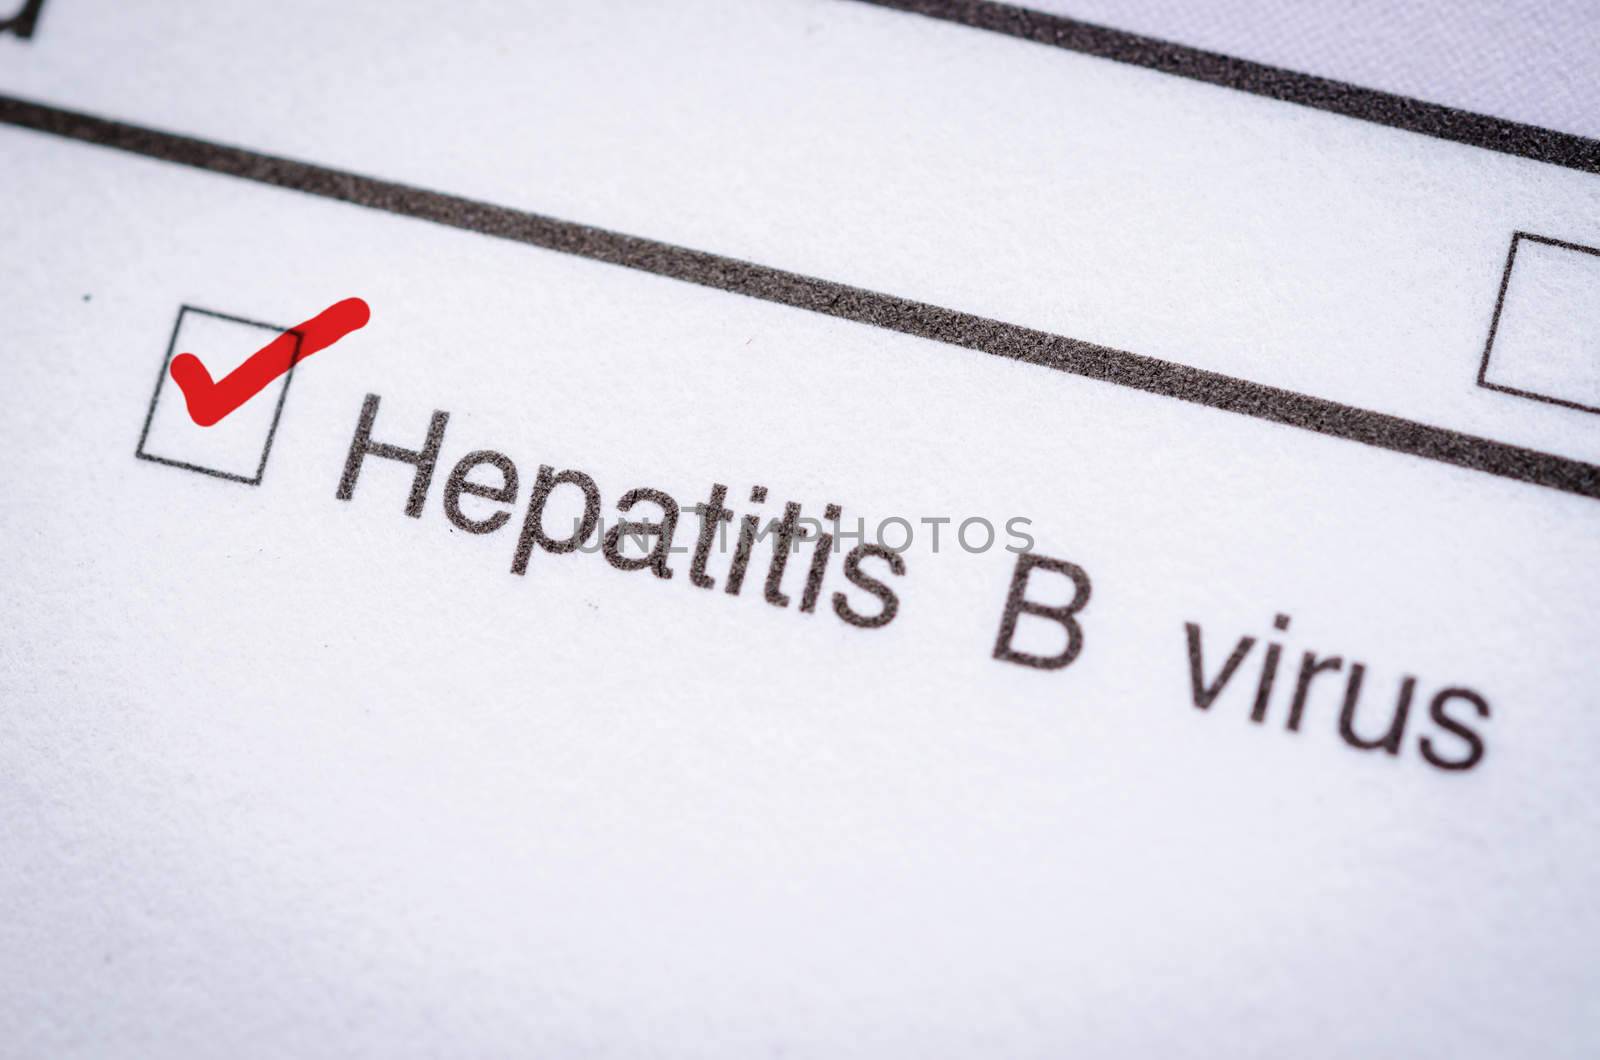 Hepatitis B form request. by Gamjai